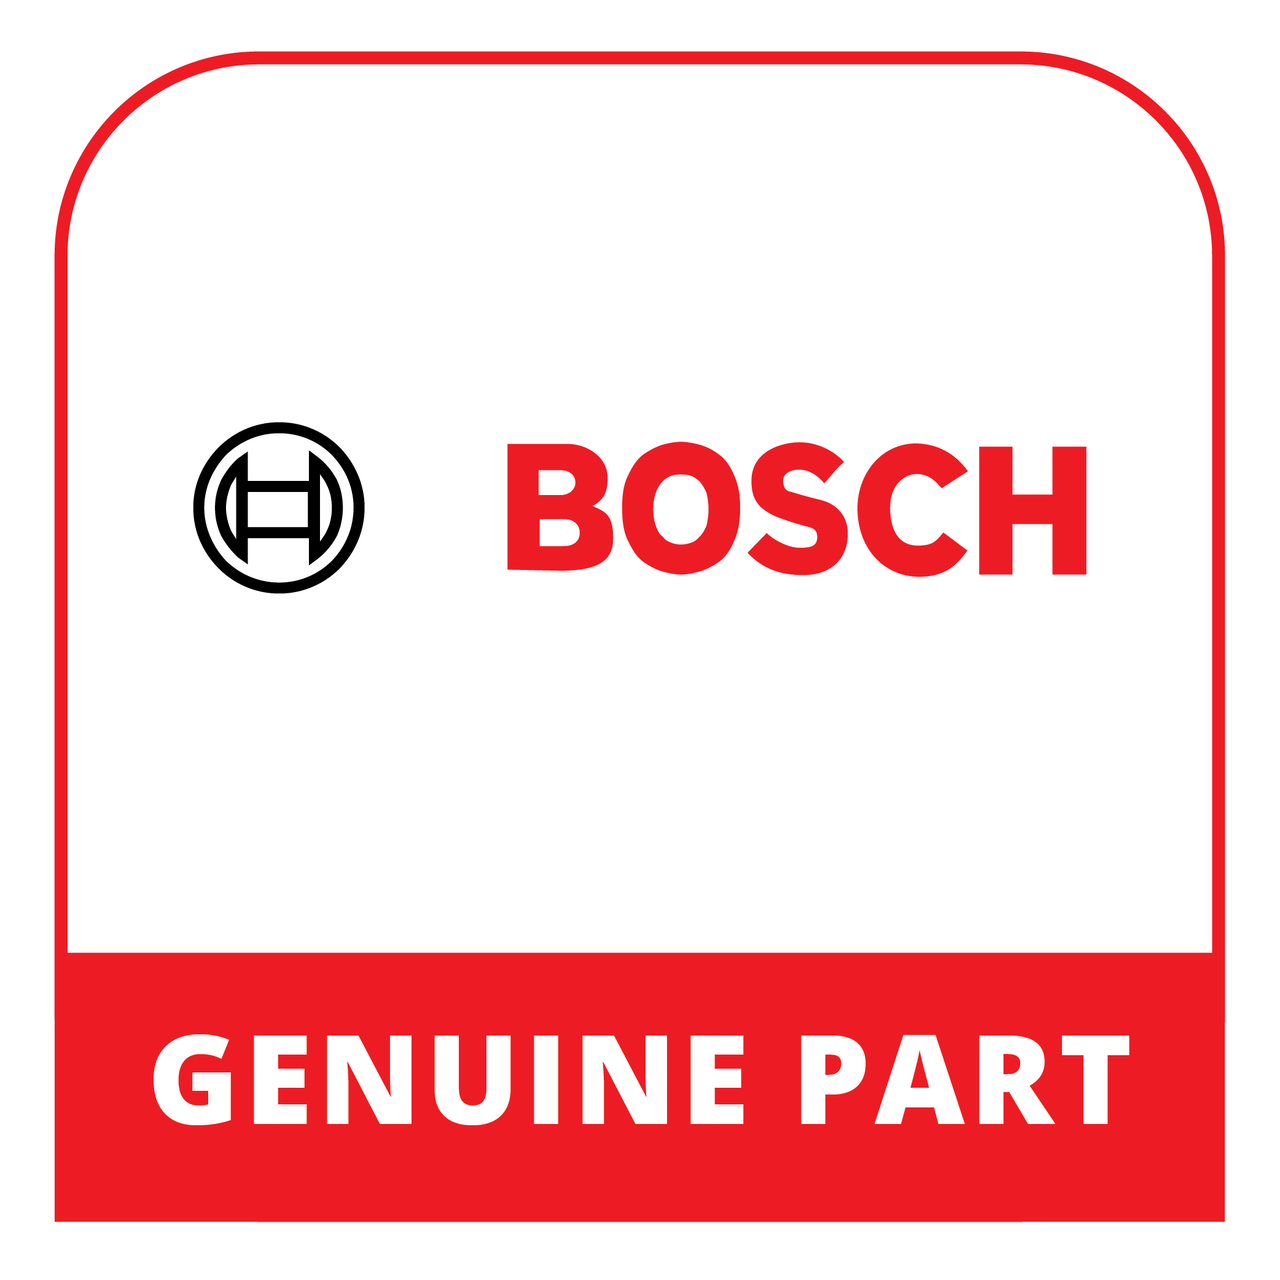 Bosch (Thermador) 00778948 - Panel-Facia - Genuine Bosch (Thermador) Part